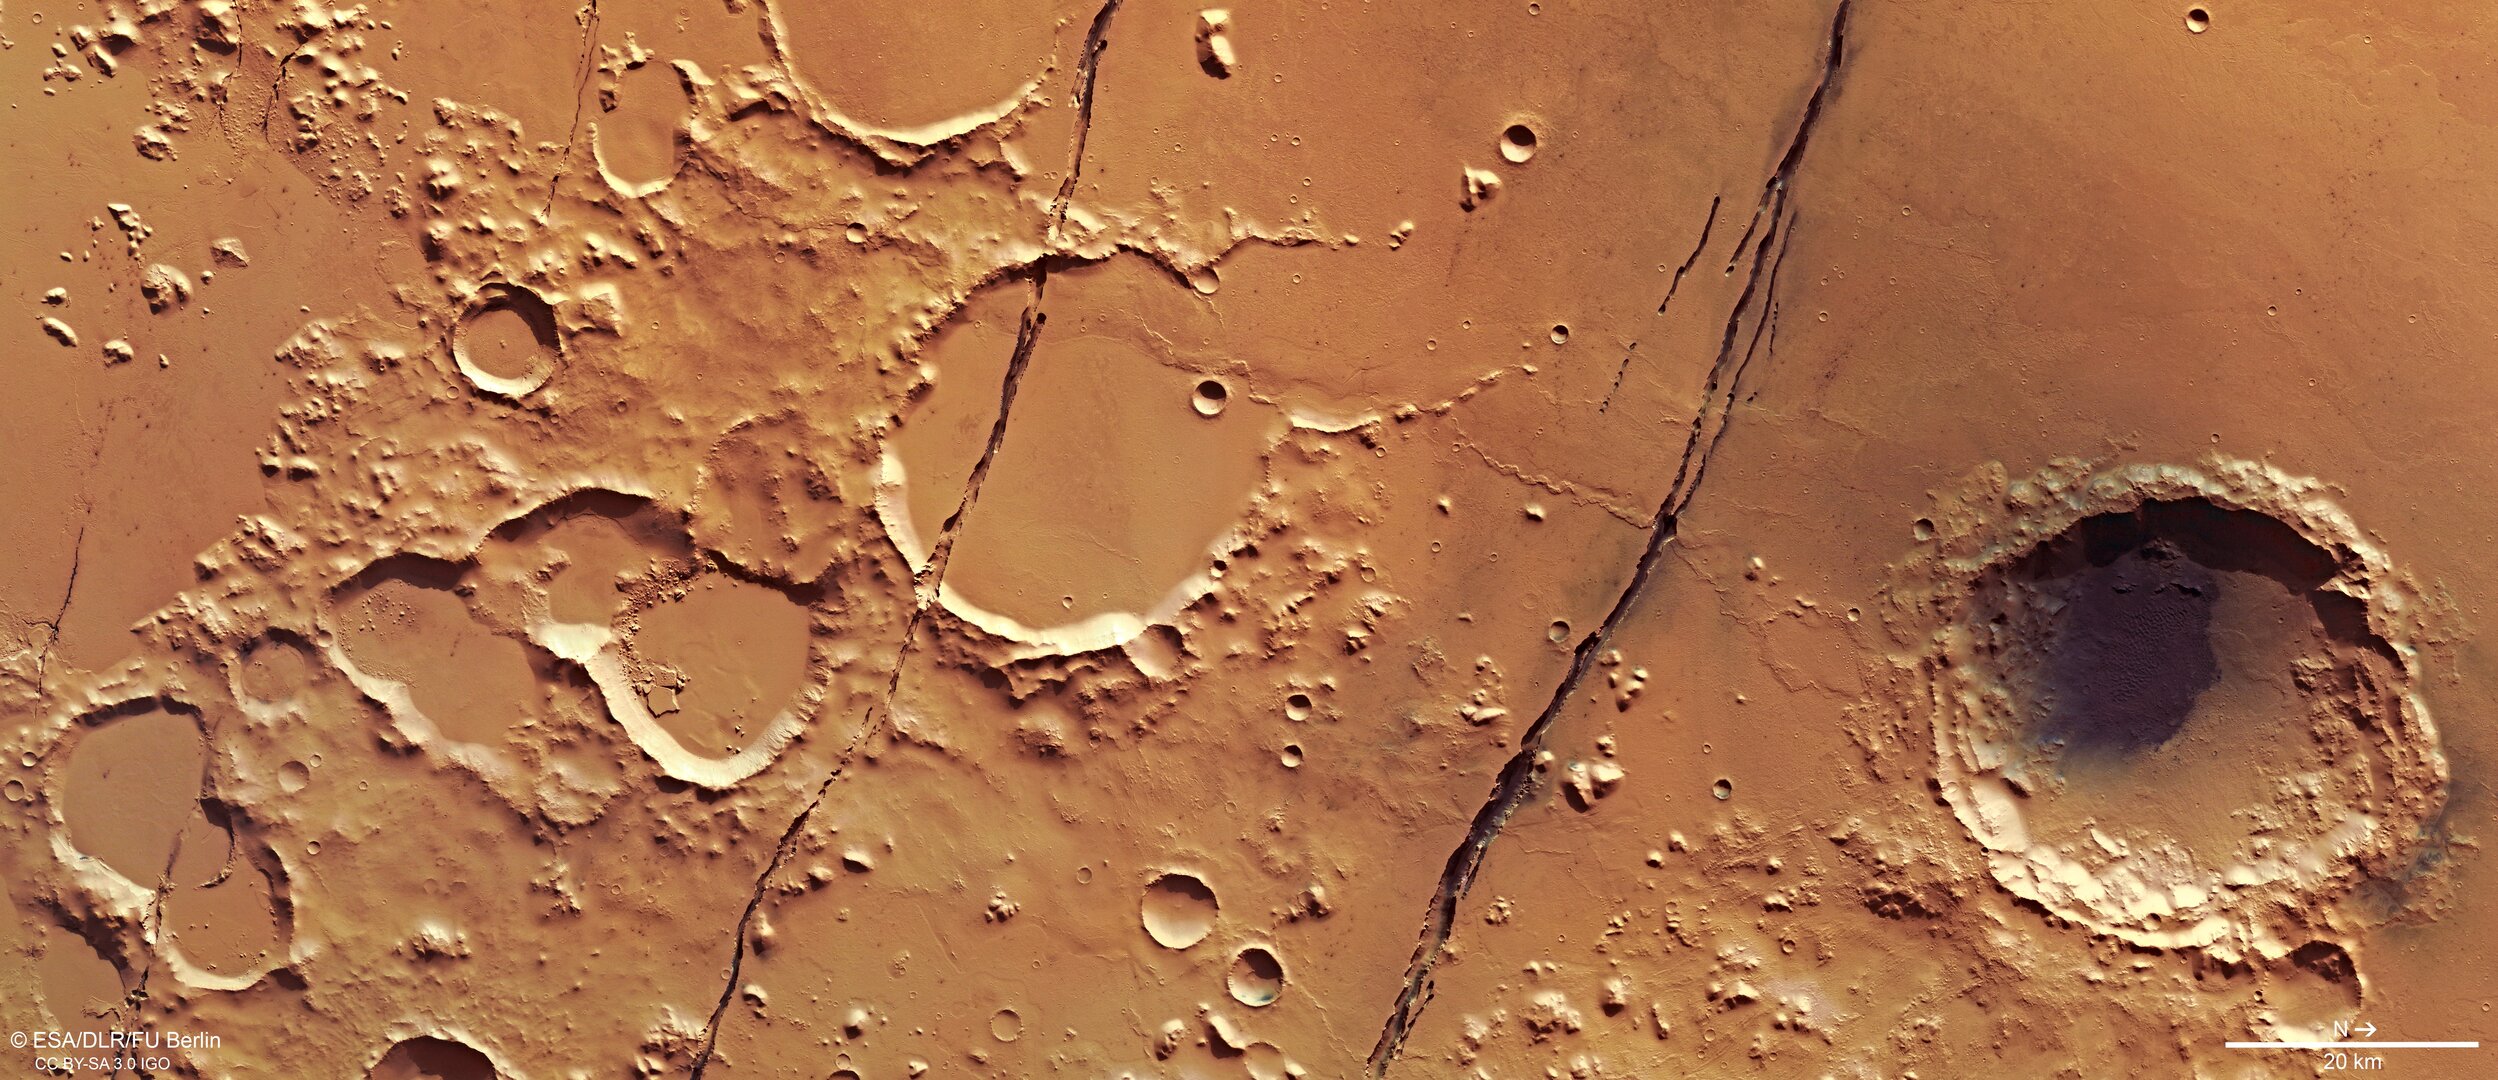 Mars Express view of Cerberus Fossae